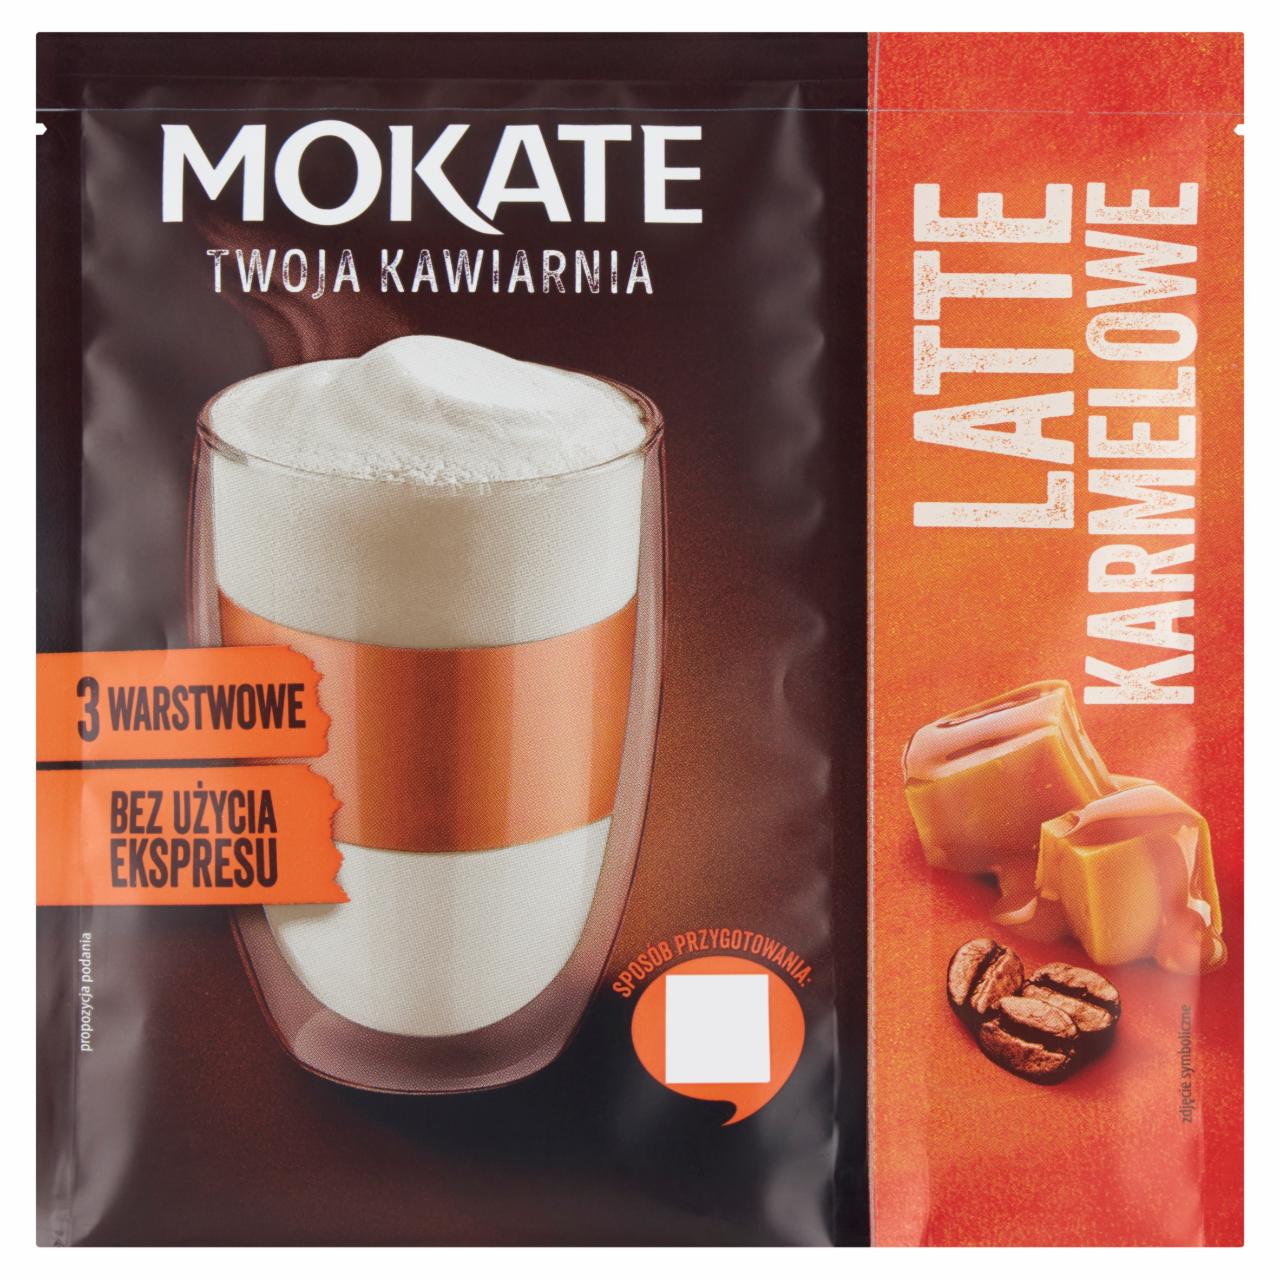 Zdjęcia - Mokate Twoja Kawiarnia Latte karmelowe 22 g